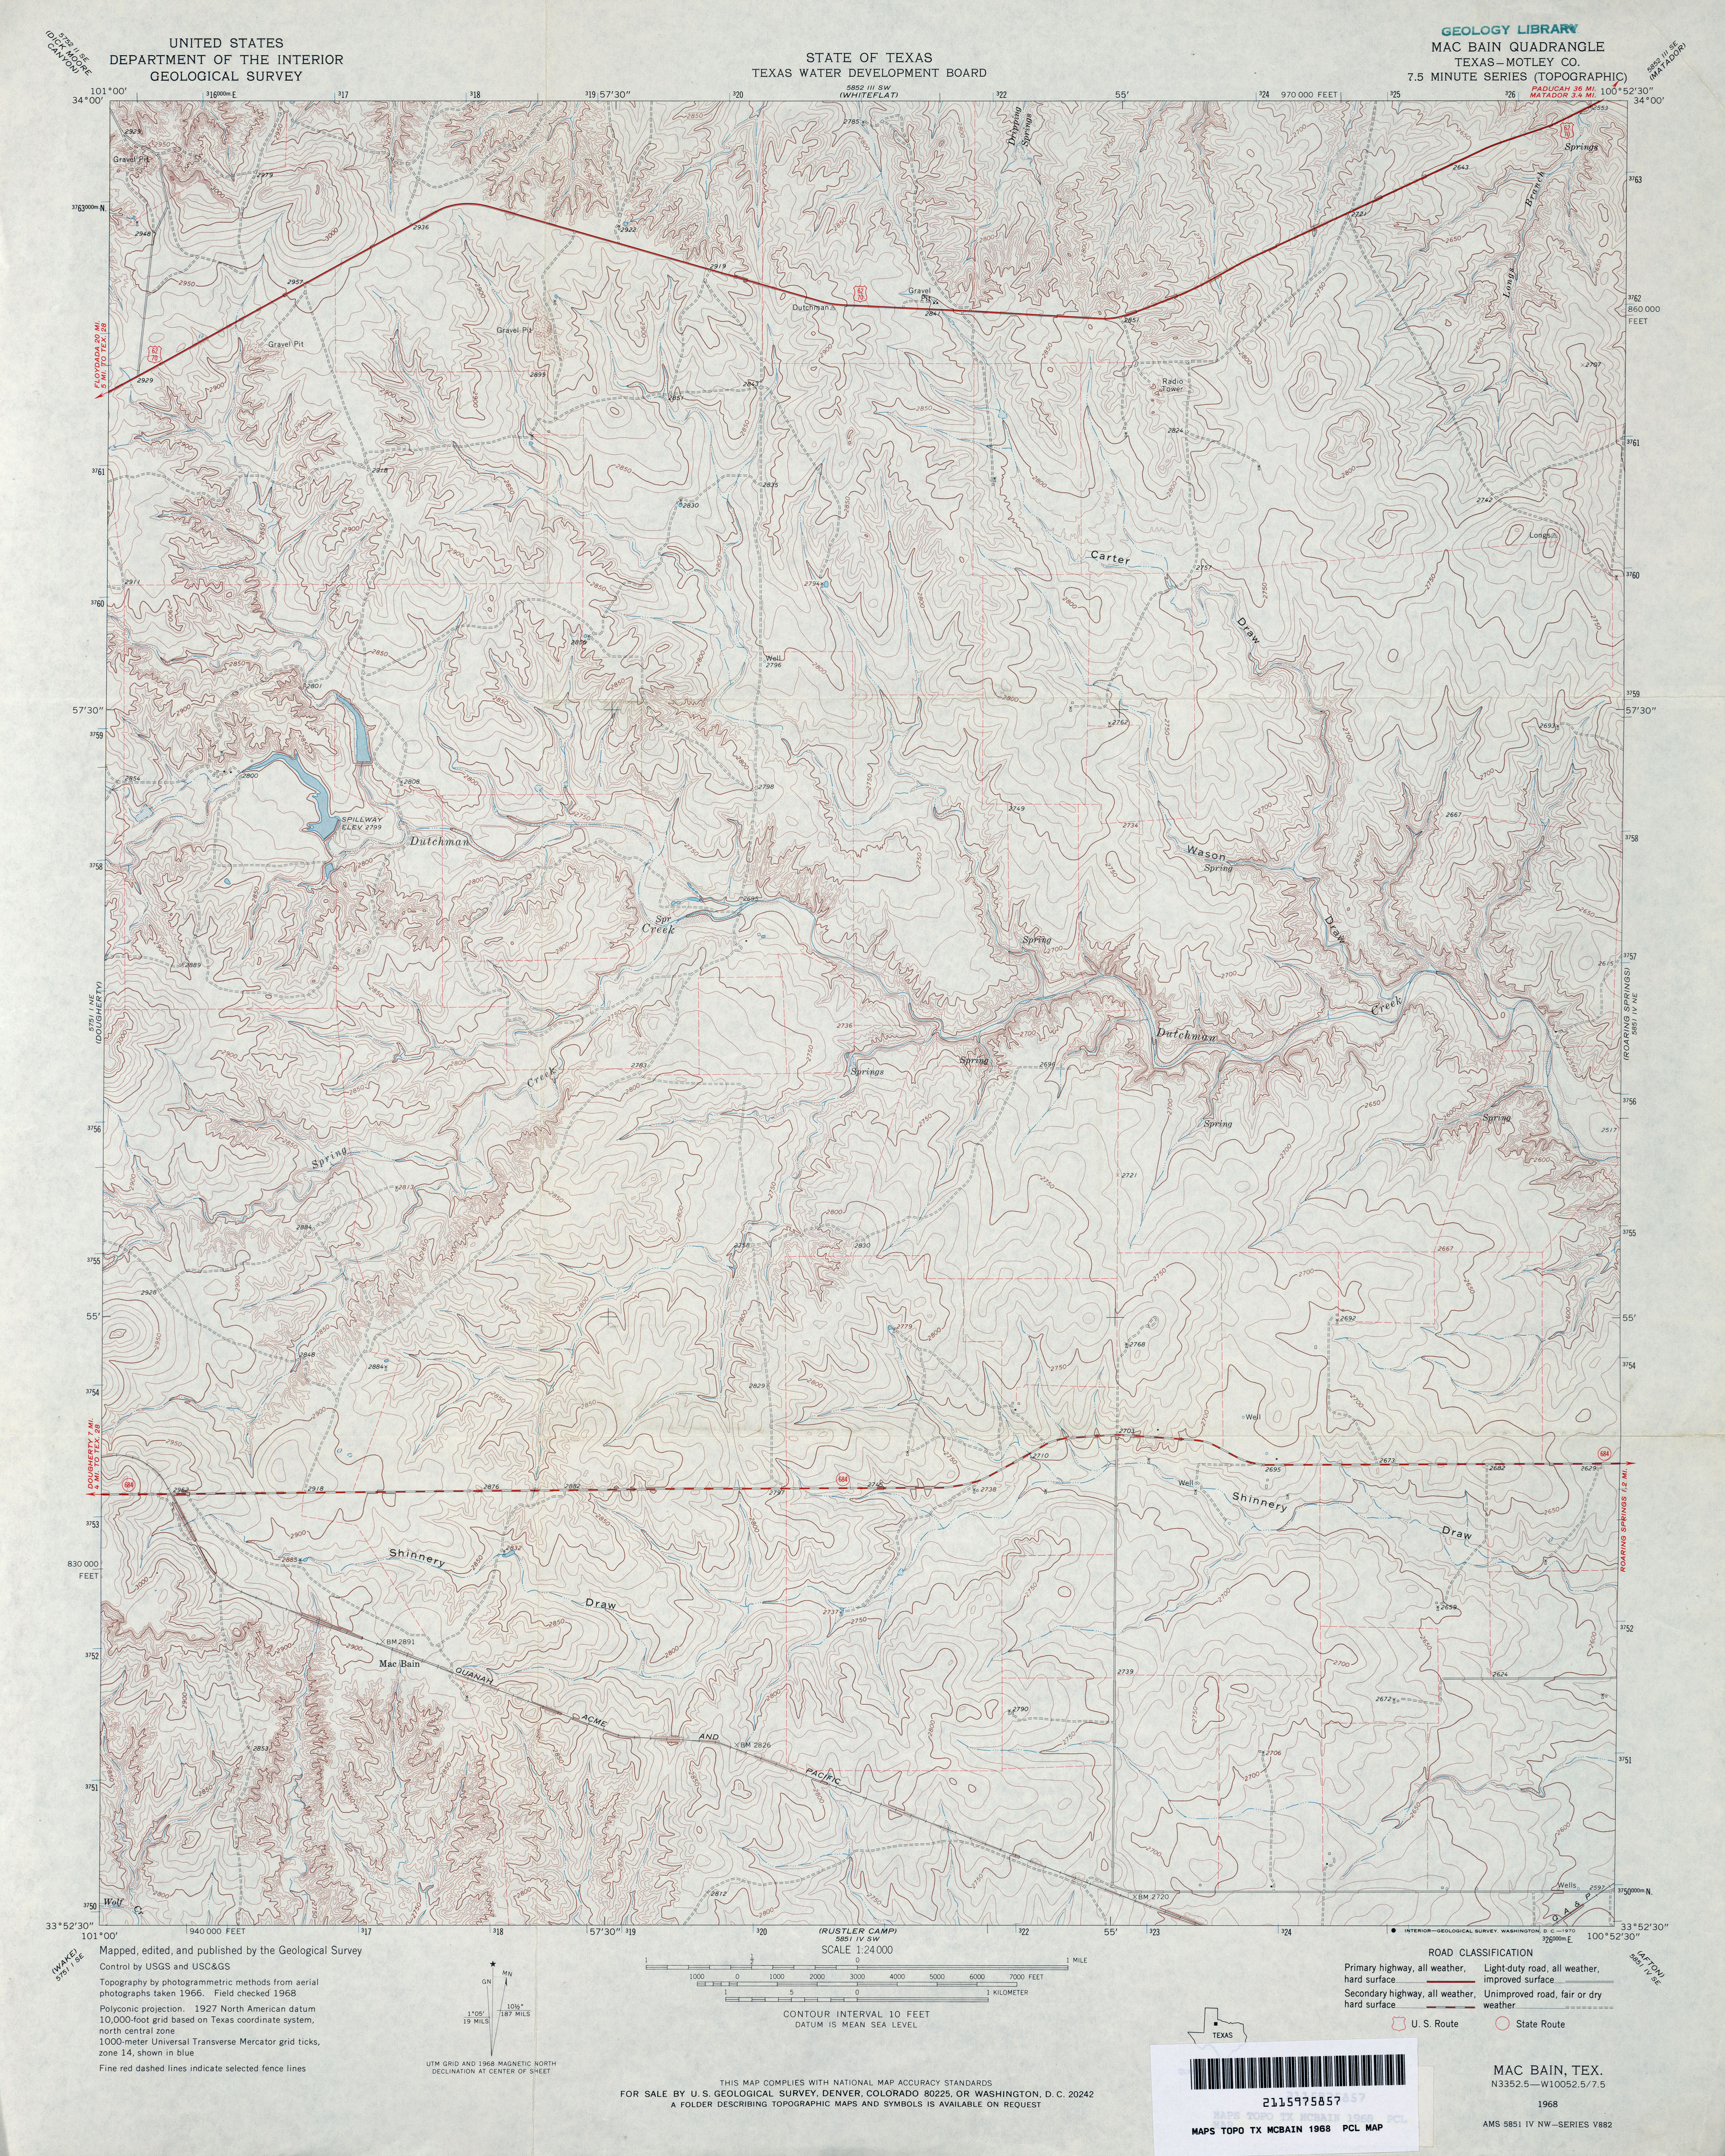 West Louisiana War Dept 1891-23 x 37.31 East Texas Topographical Map Print 